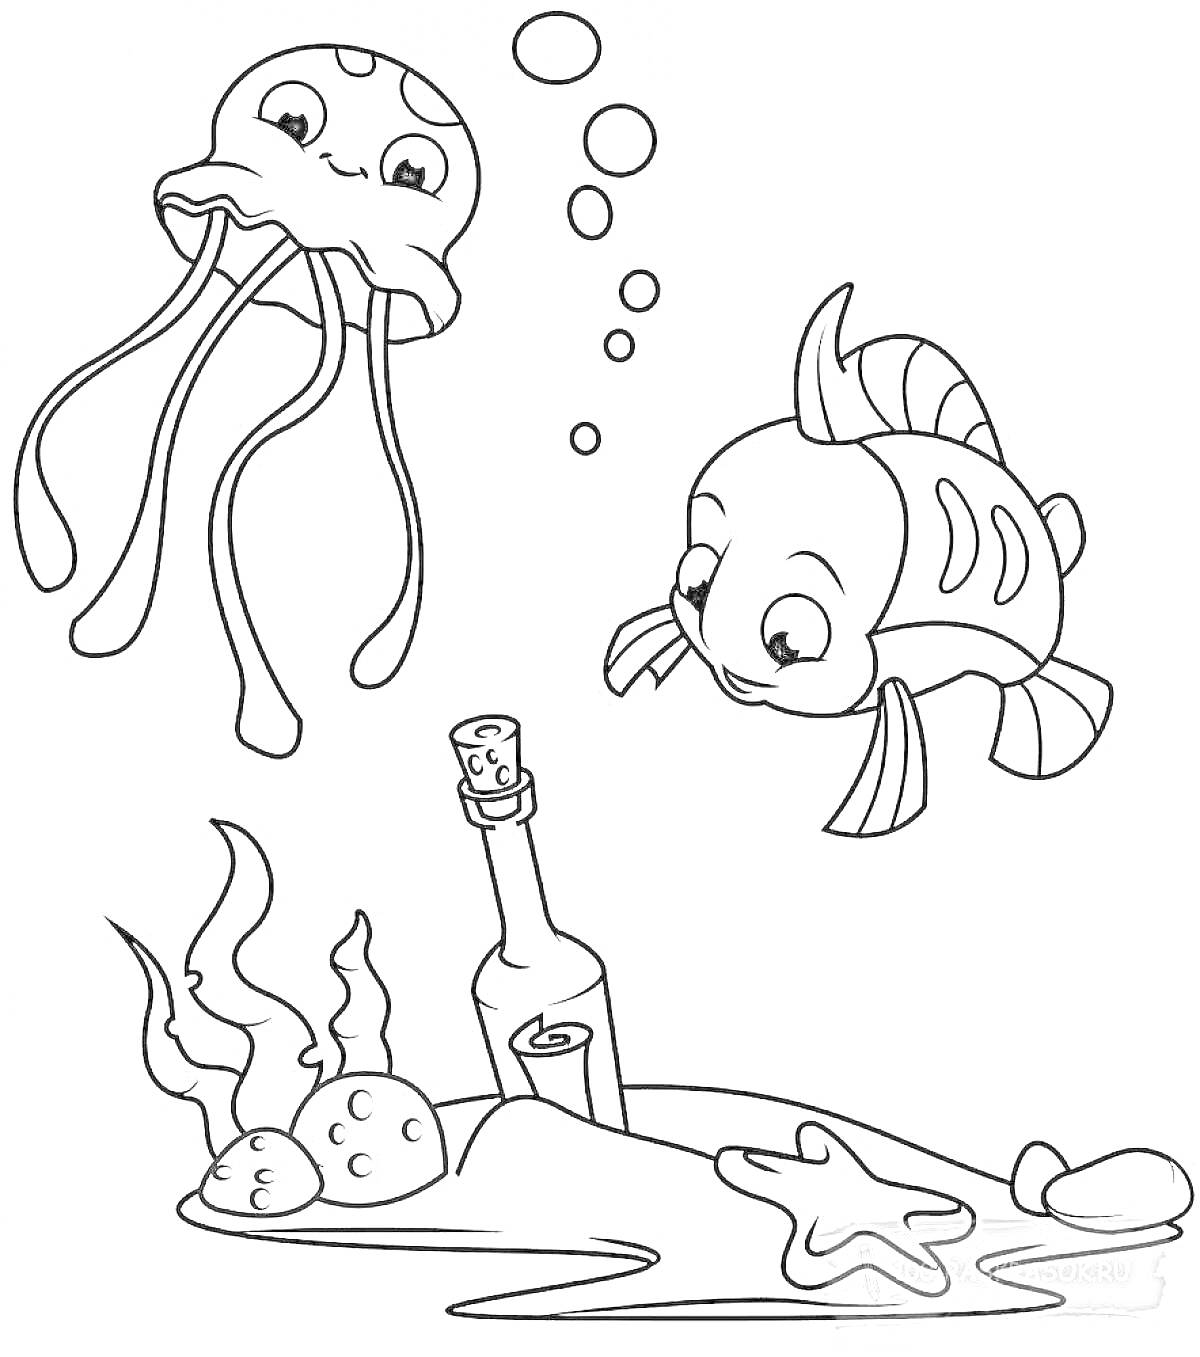 Медуза, рыбка, бутылка с посланием, водоросли, ракушки, песок и звезда на морском дне